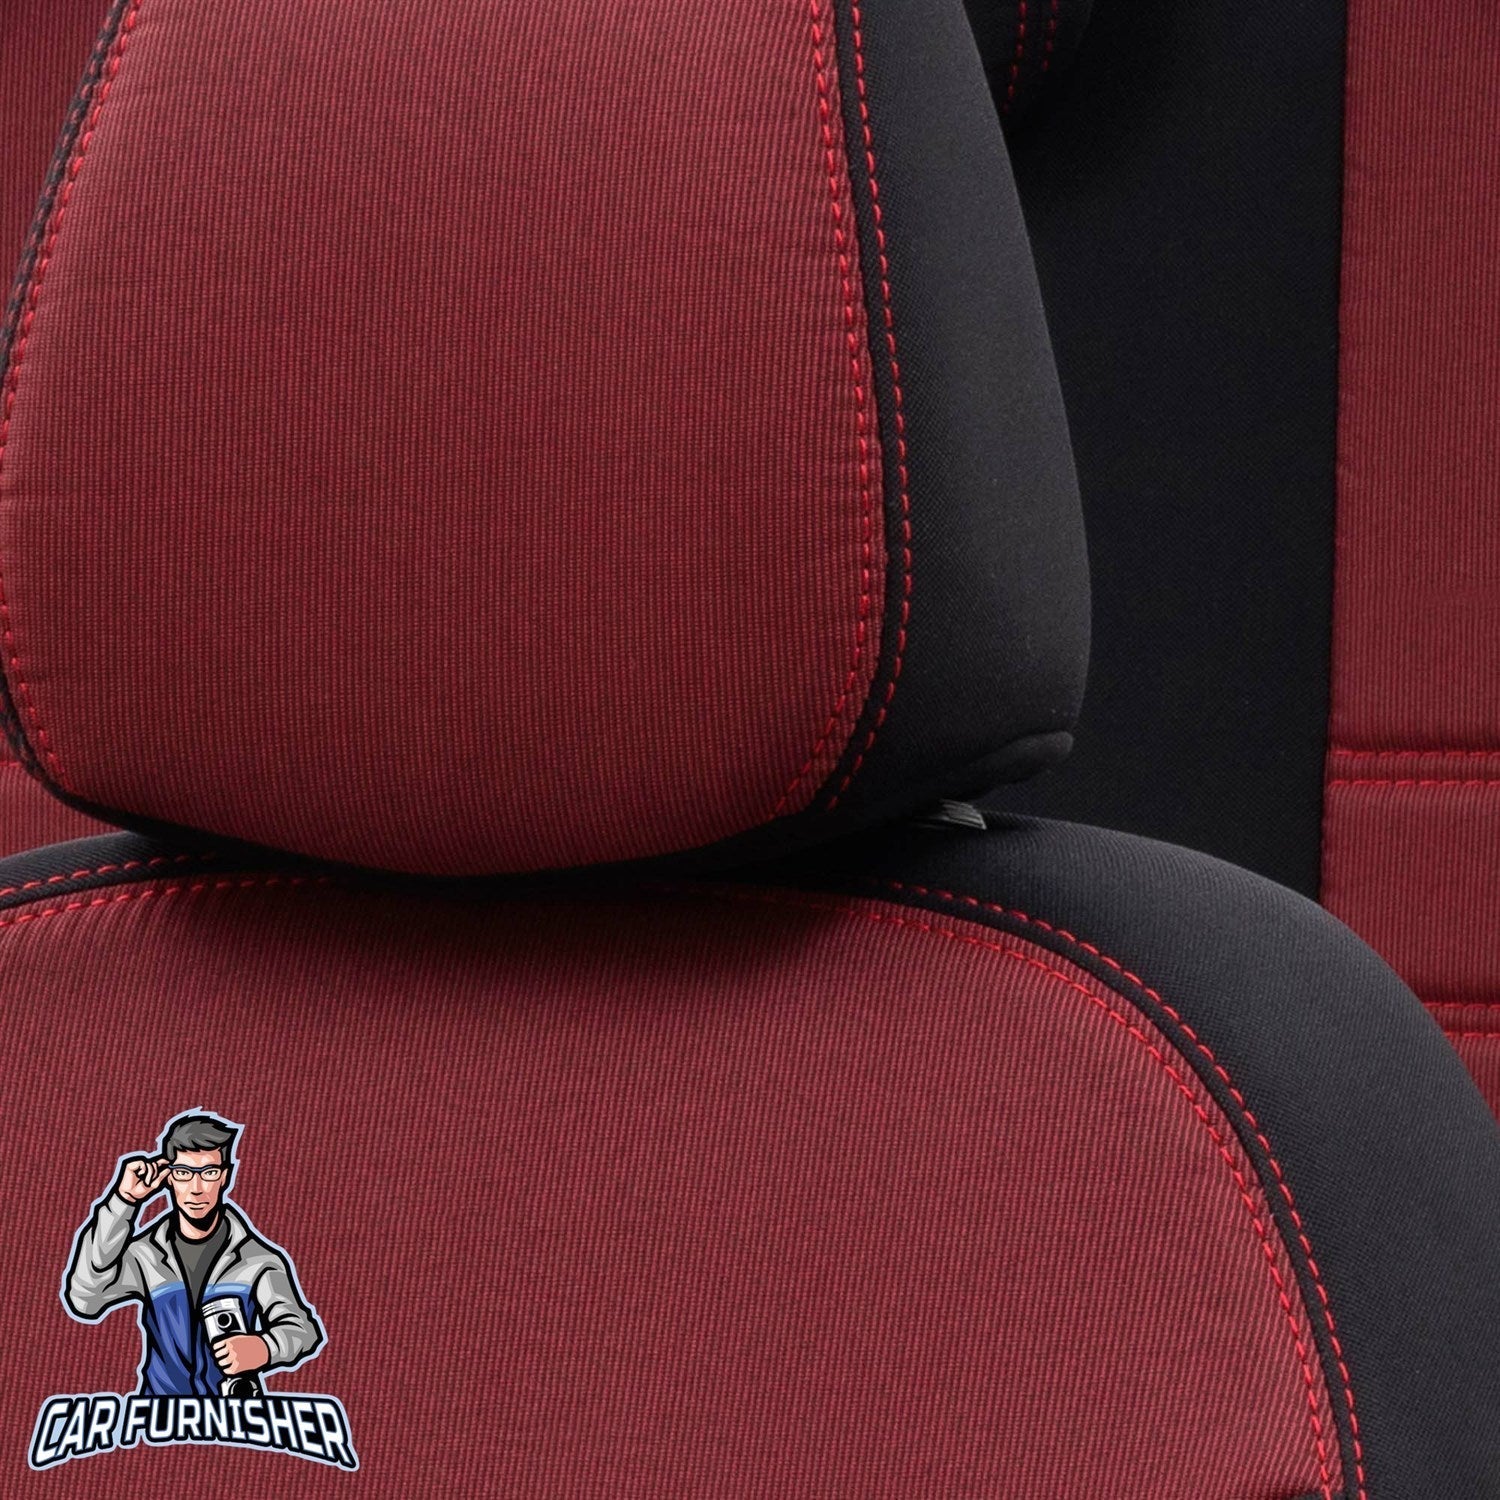 Geely Emgrand Seat Covers Original Jacquard Design Red Jacquard Fabric